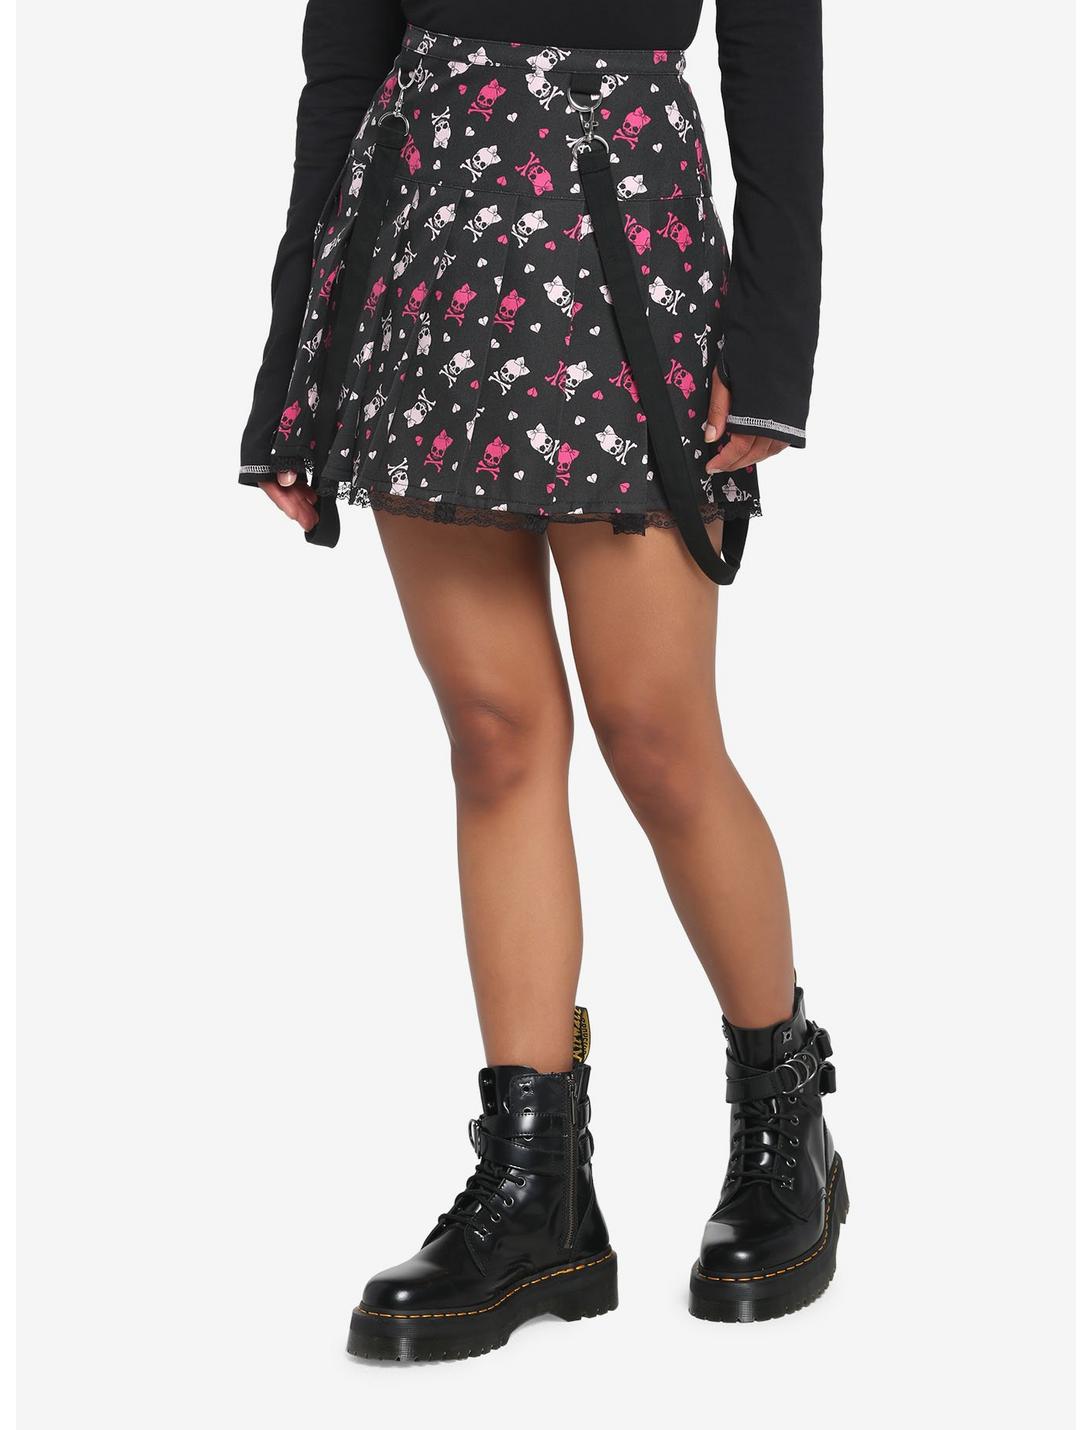 Black & Pink Skulls Pleated Suspender Skirt, BLACK, hi-res